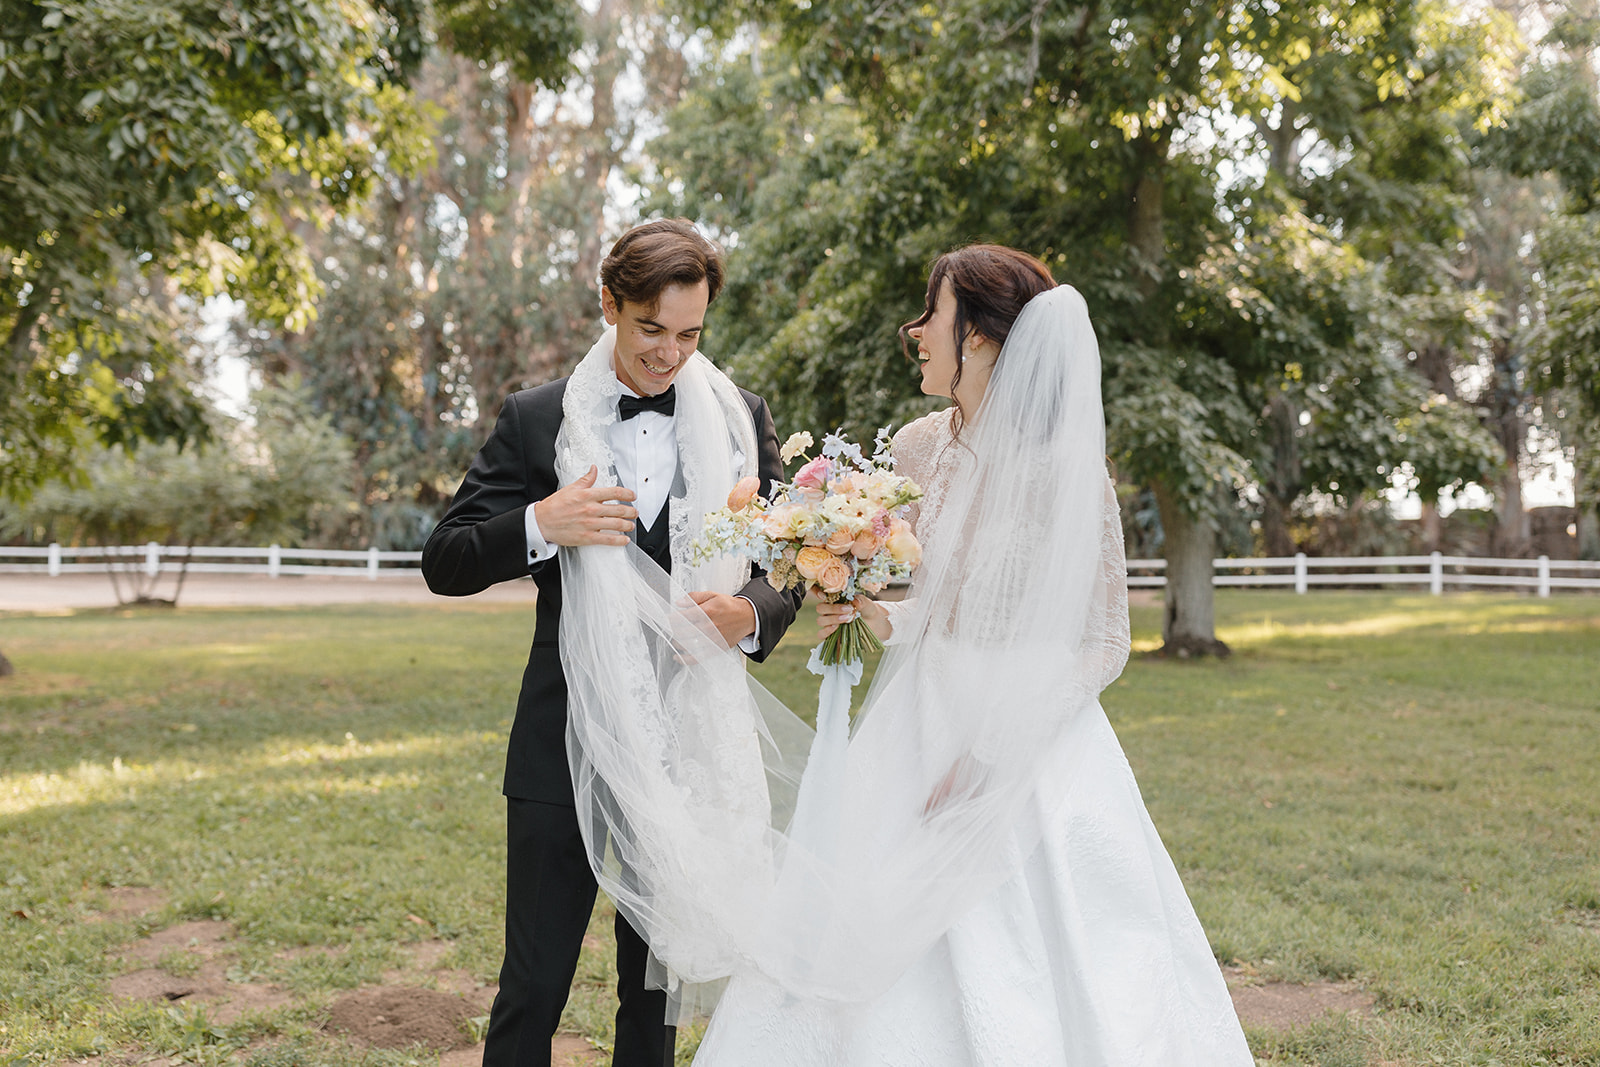 Romantic wedding at Walnut Grove in Moorpark, California